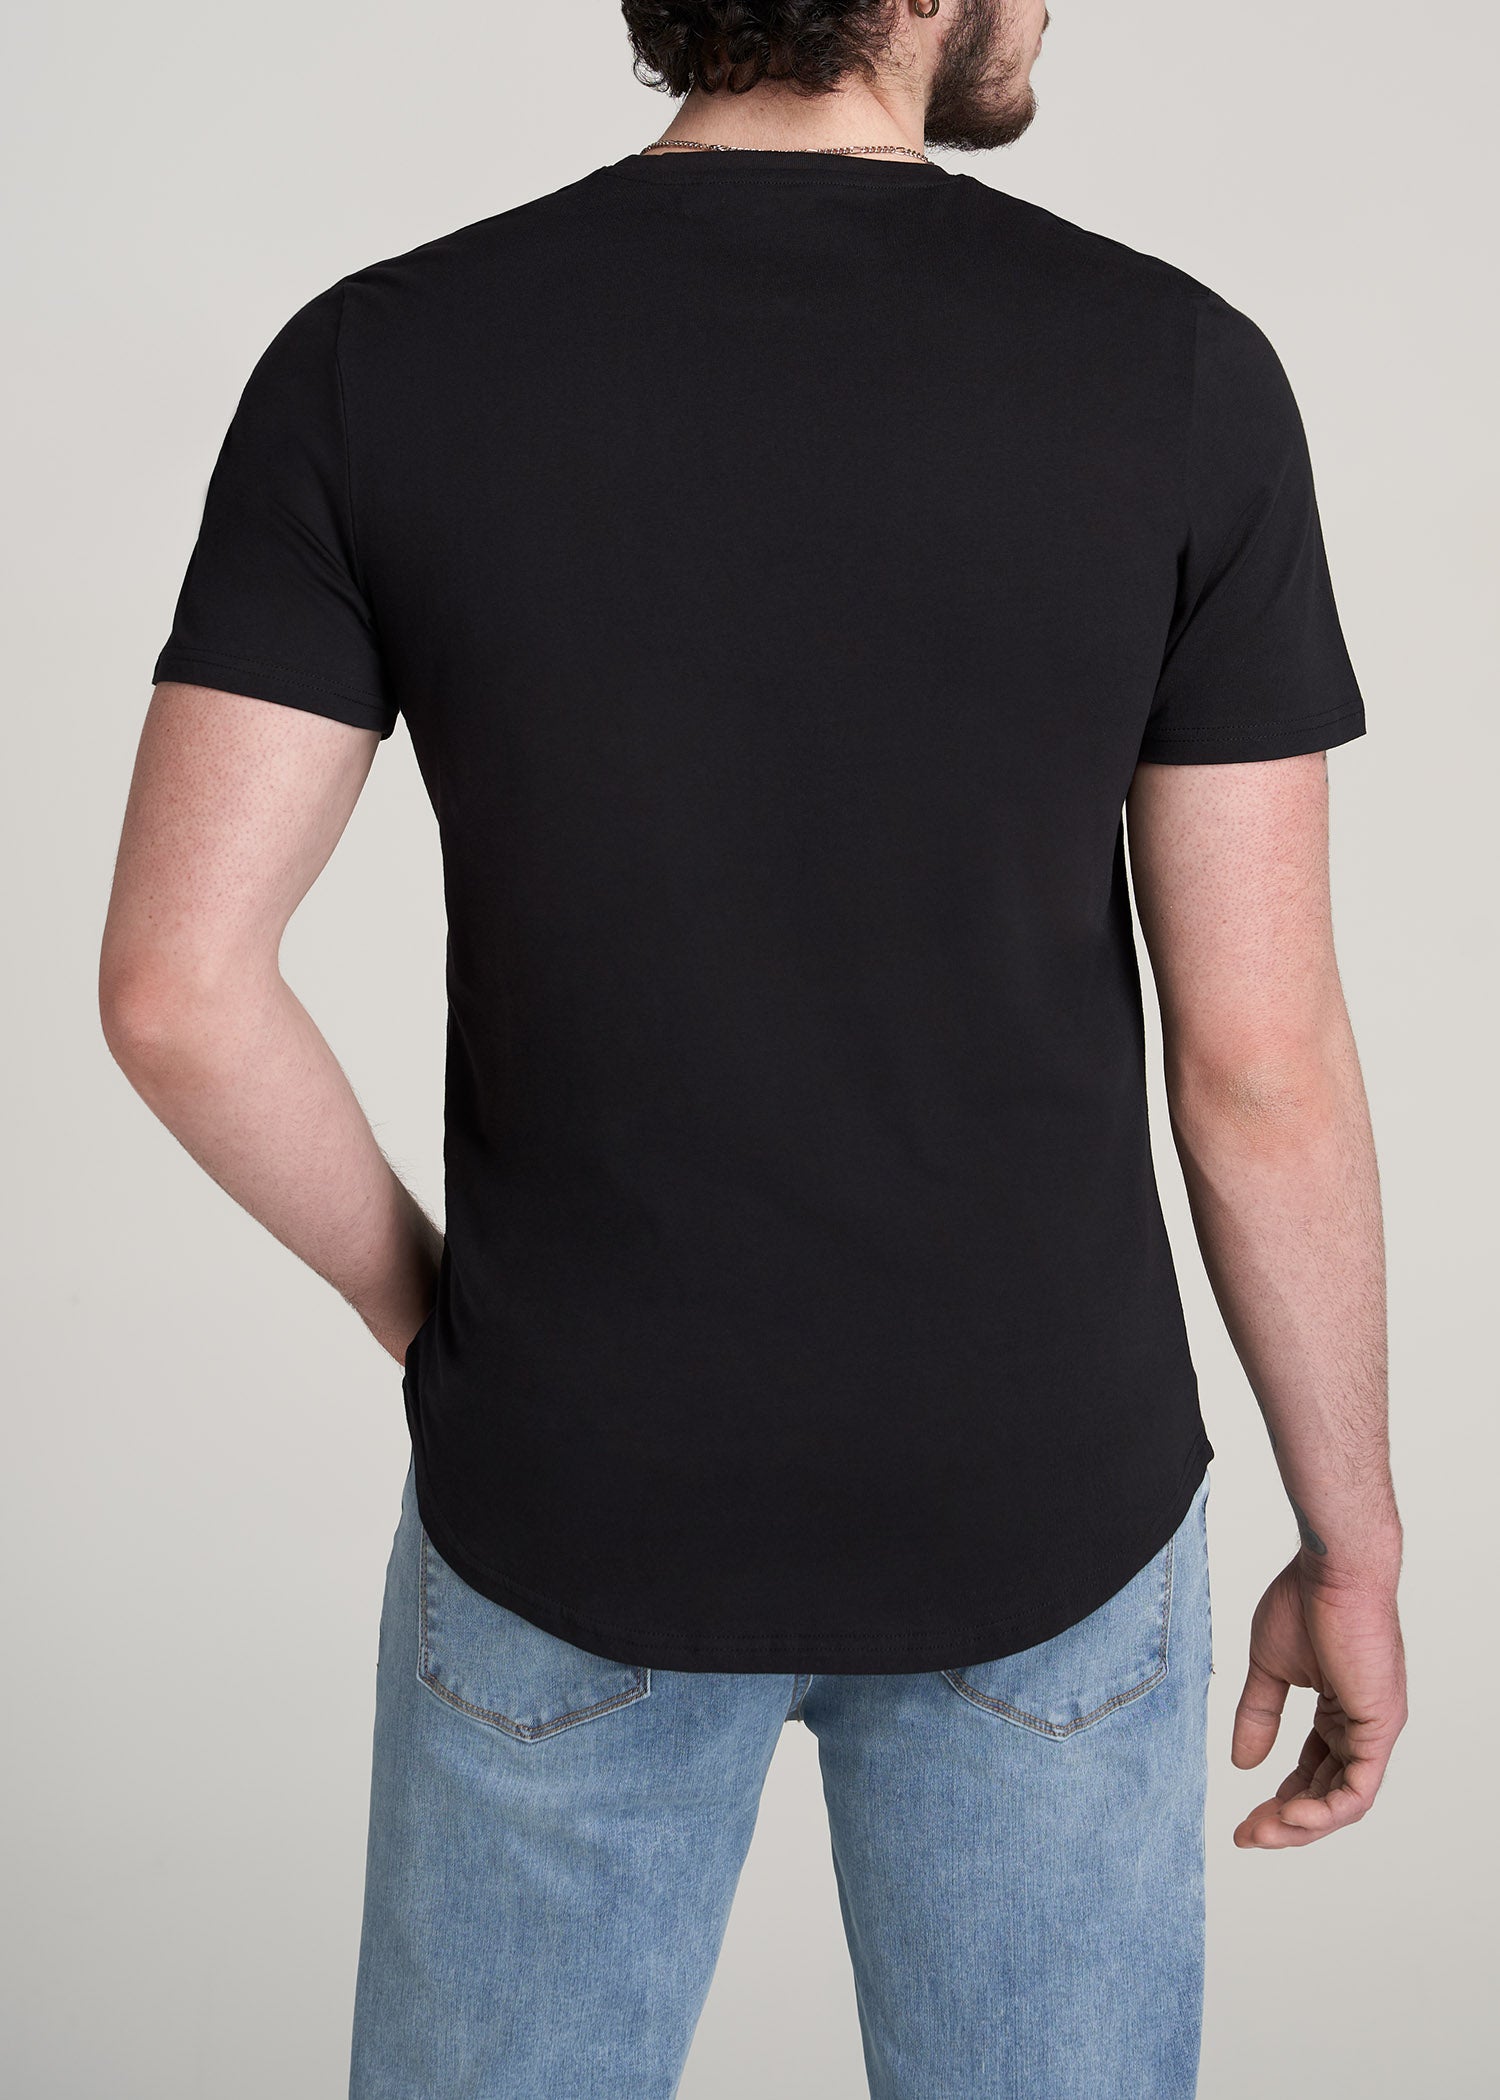 T-shirts Mens: Men's Tall Bottom Tees | American Tall